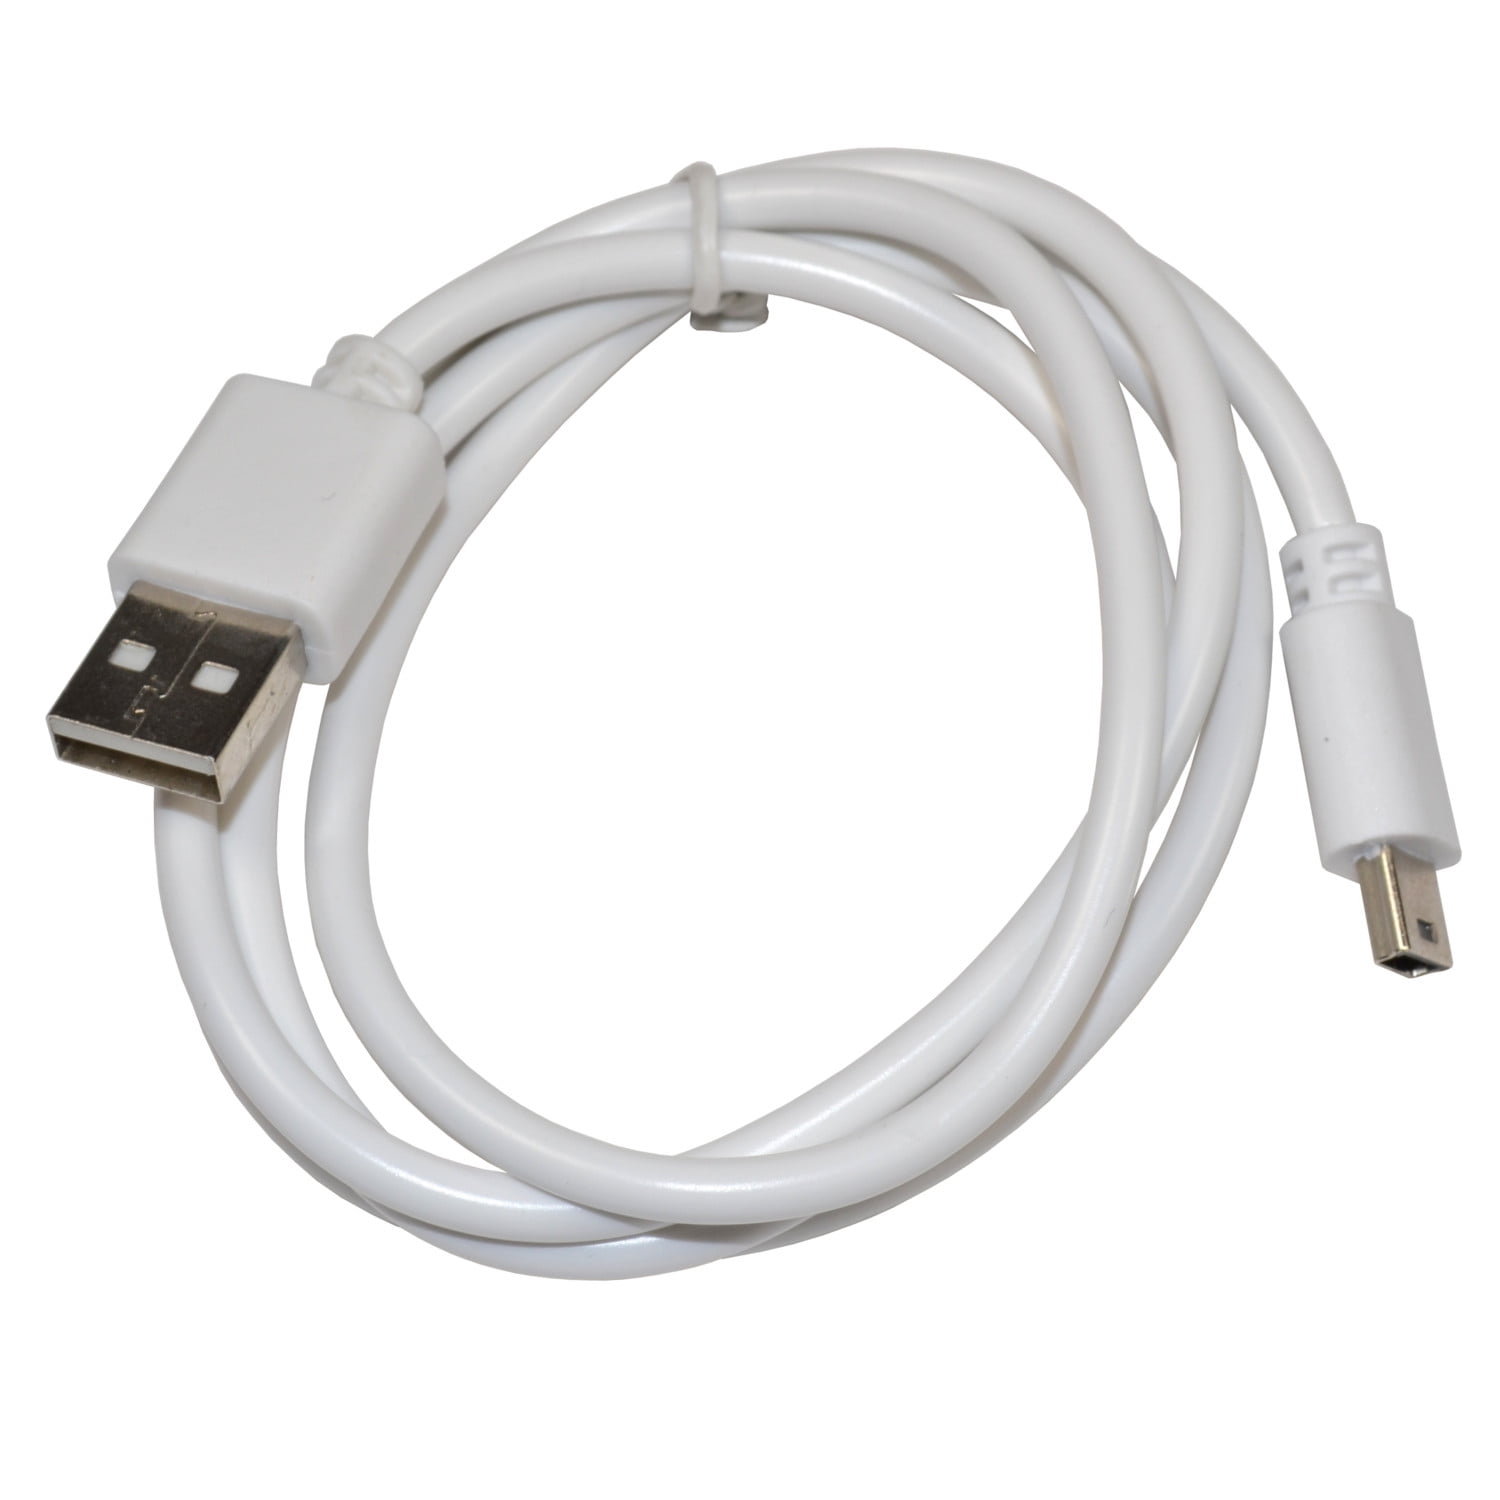 Câble Alimentation USB Pour 9 V LeapFrog Leapster TV Game system 